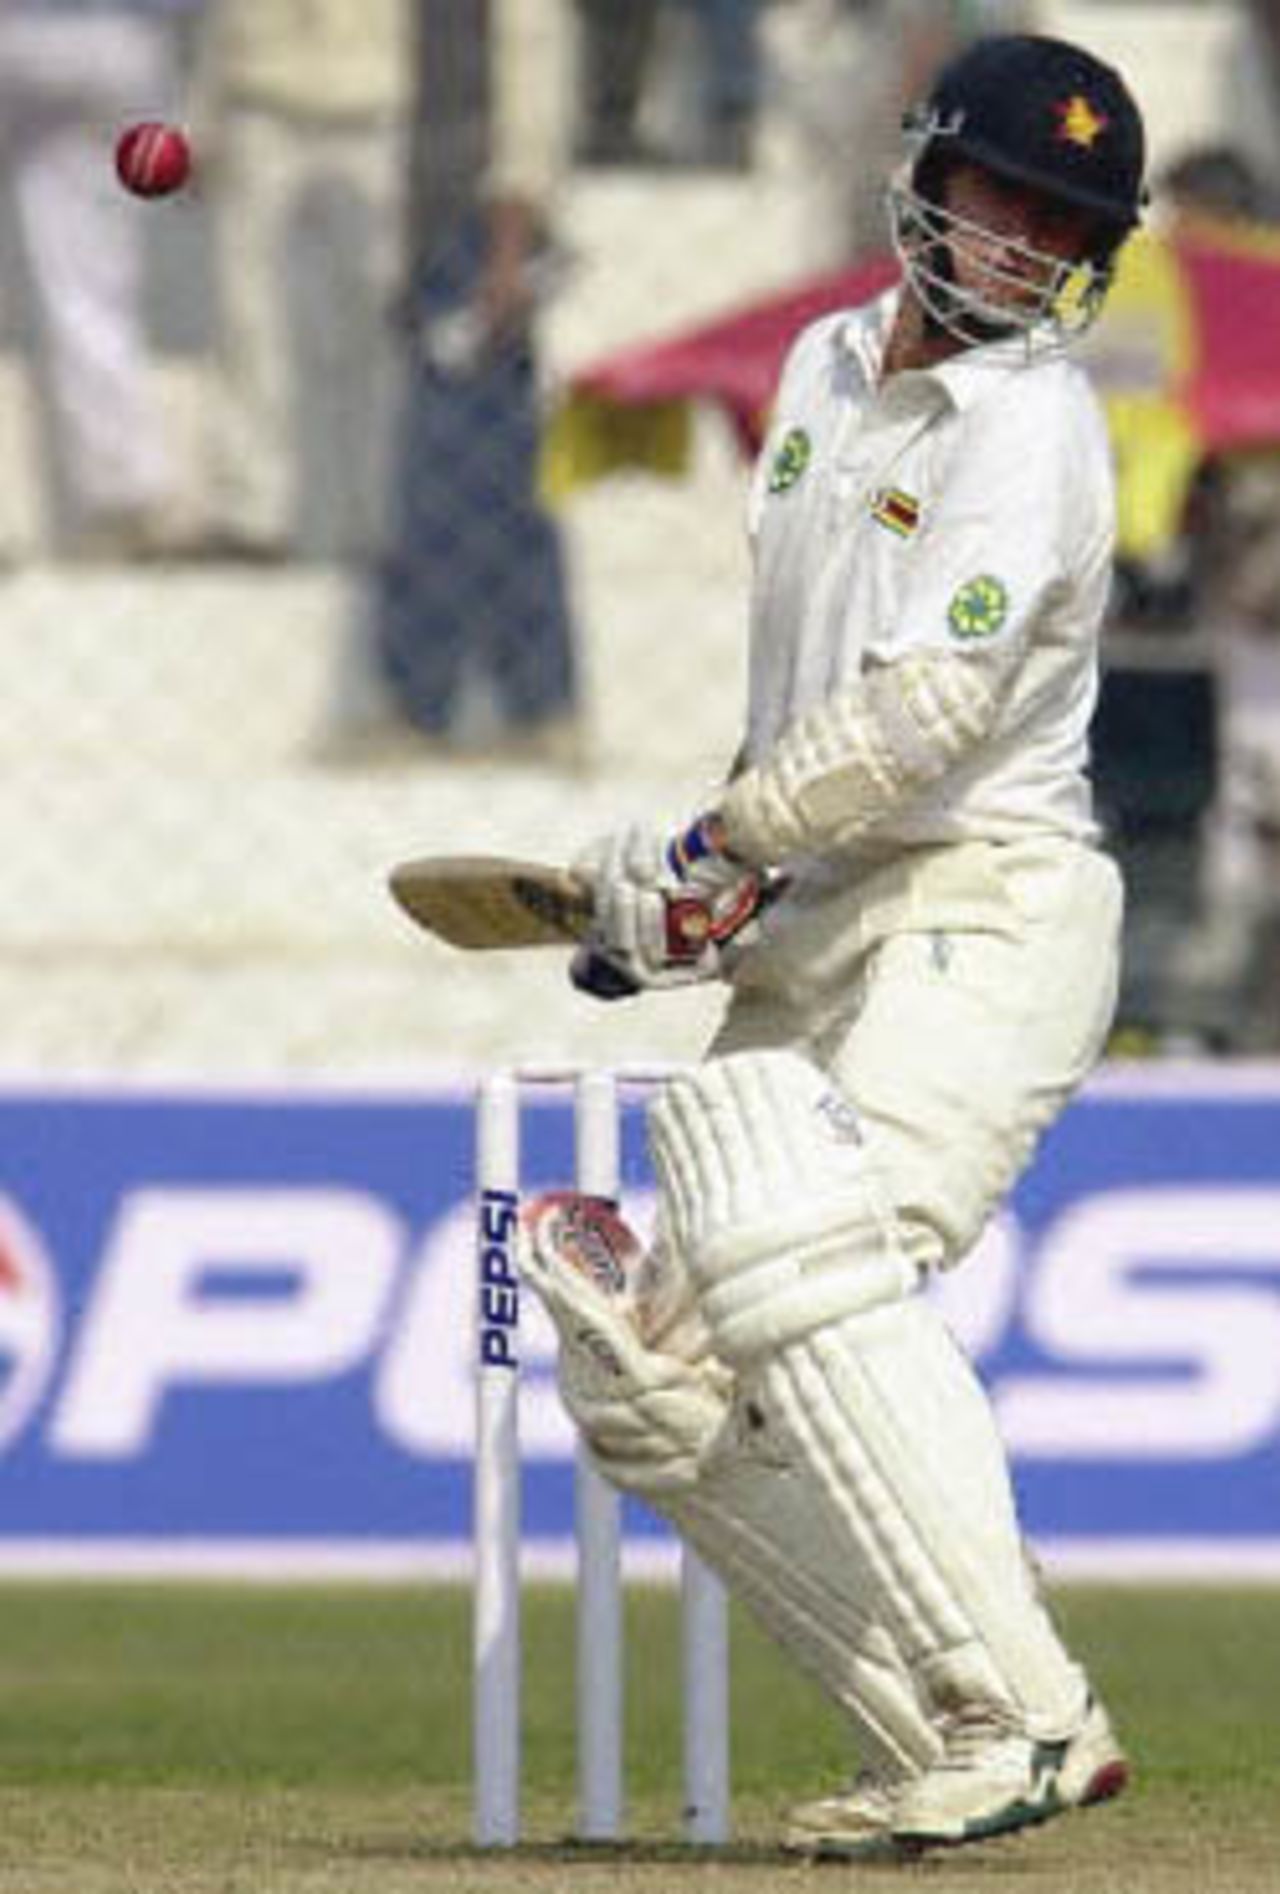 Carlisle pulls away from a short ball, Zimbabwe in India, 2000/01, 1st Test, India v Zimbabwe, Feroz Shah Kotla, Delhi, 18-22 November 2000 (Day 1).